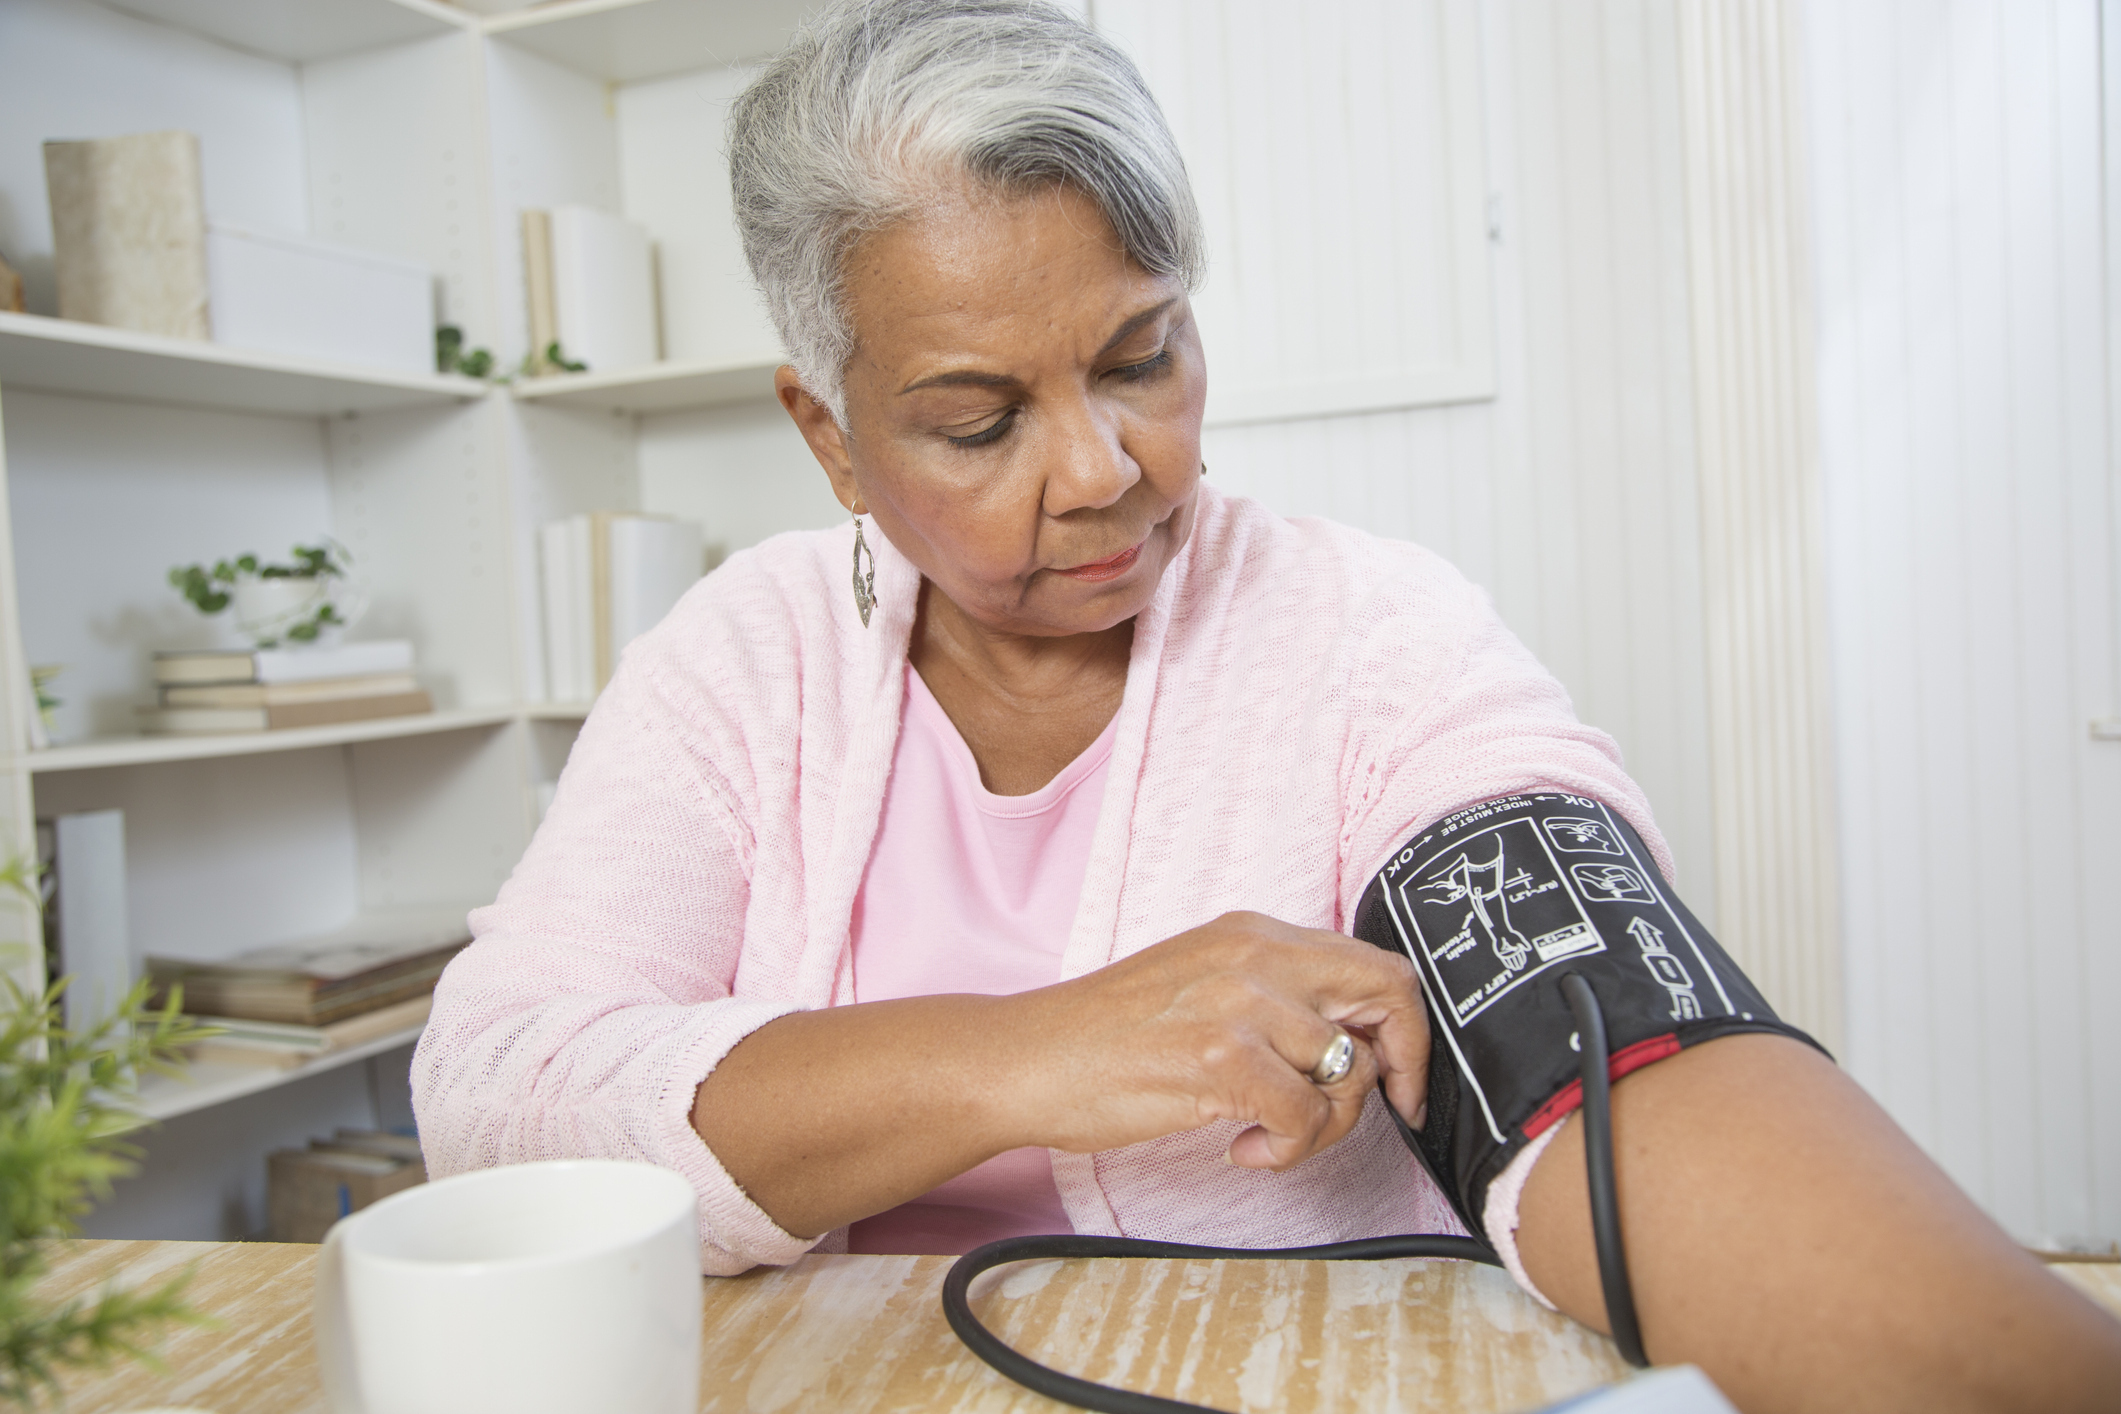 Woman at kitchen table adjusts blood-pressure cuff.